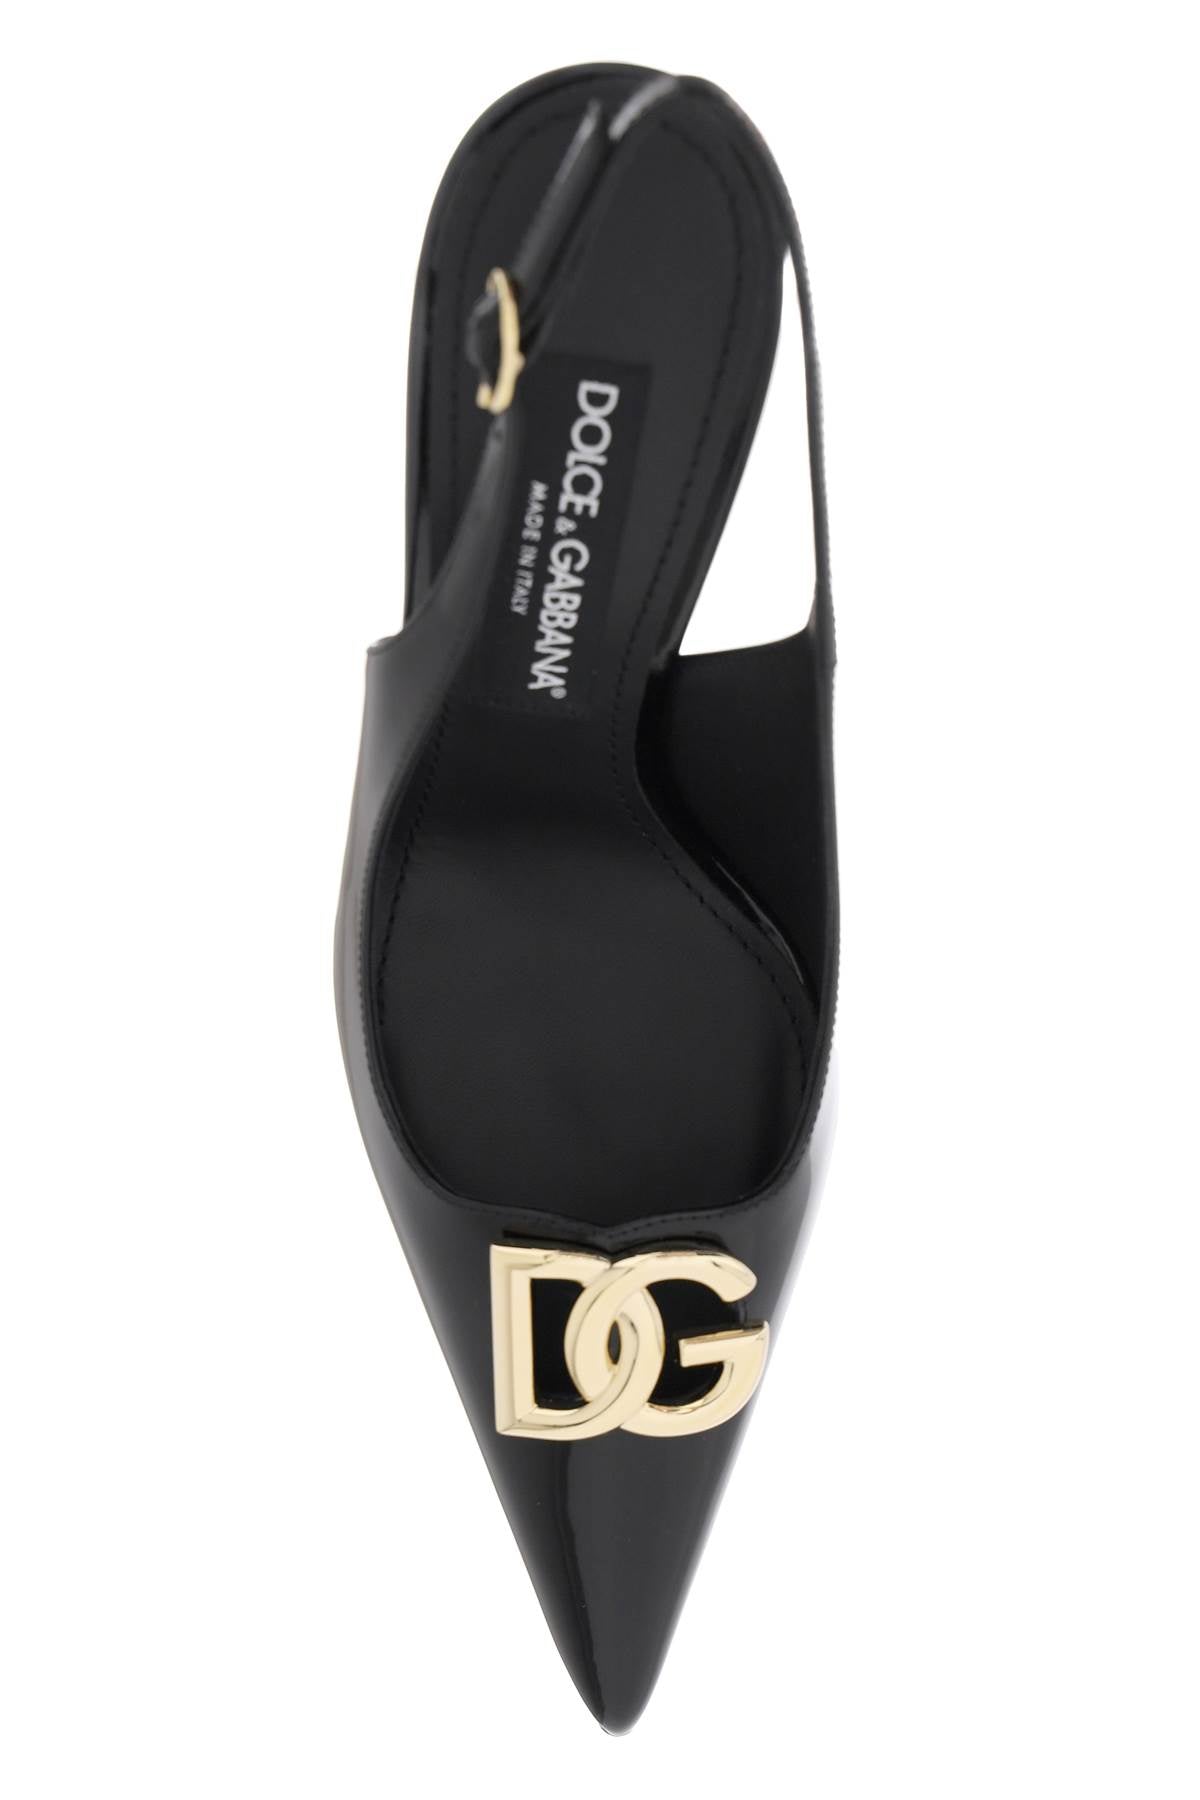 Dolce & Gabbana Dolce & gabbana glossy leather slingback pumps